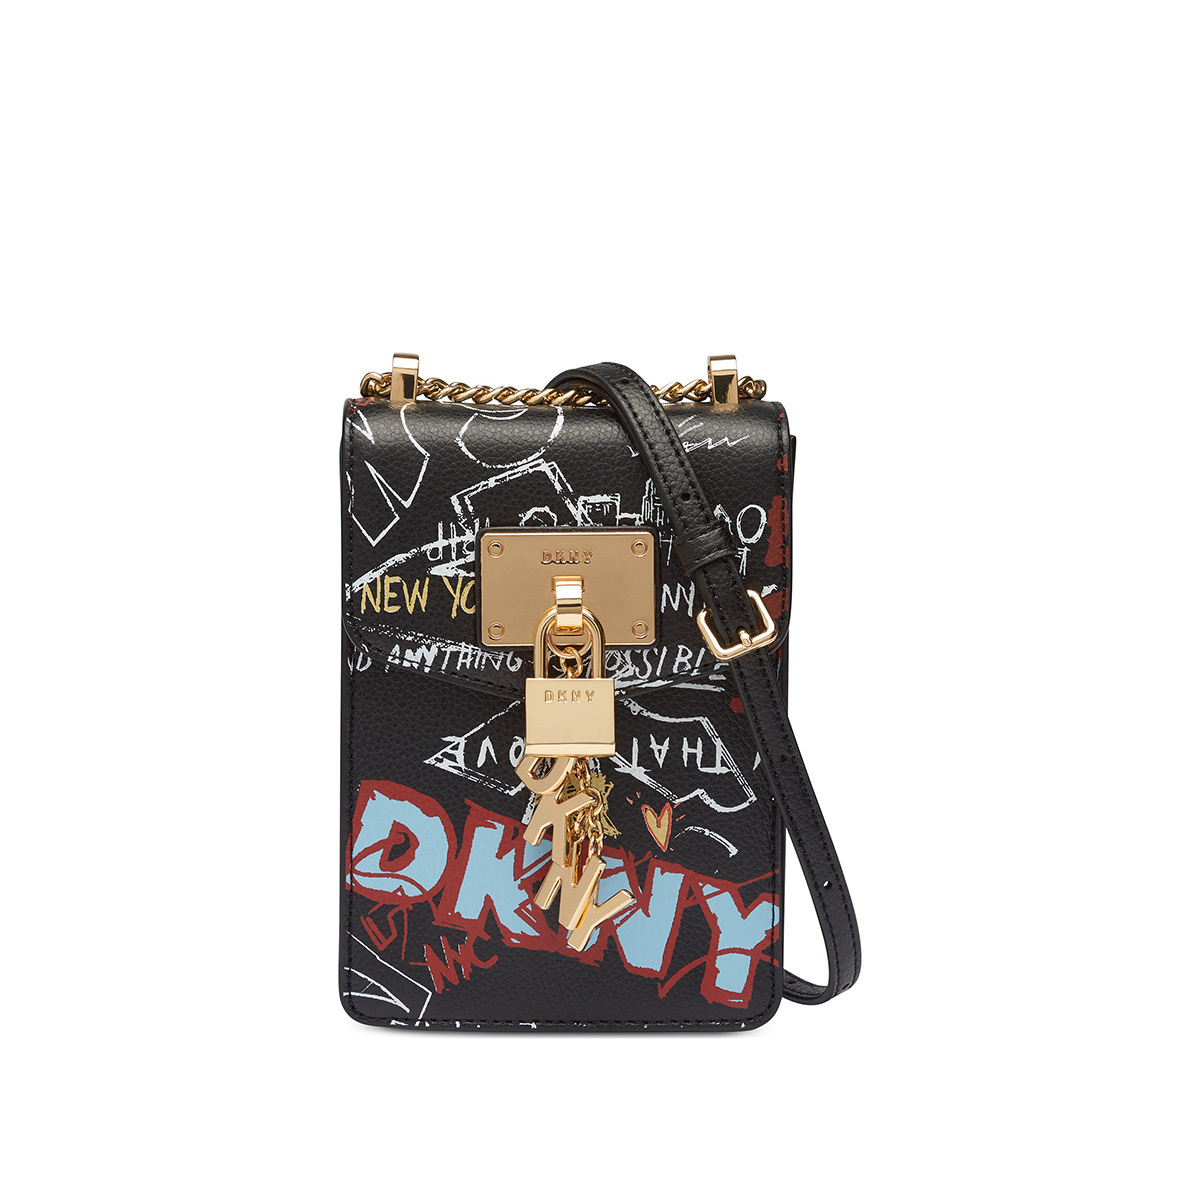 DKNY Black Elissa Graffiti North South Crossbody NYC Bag New With Tags